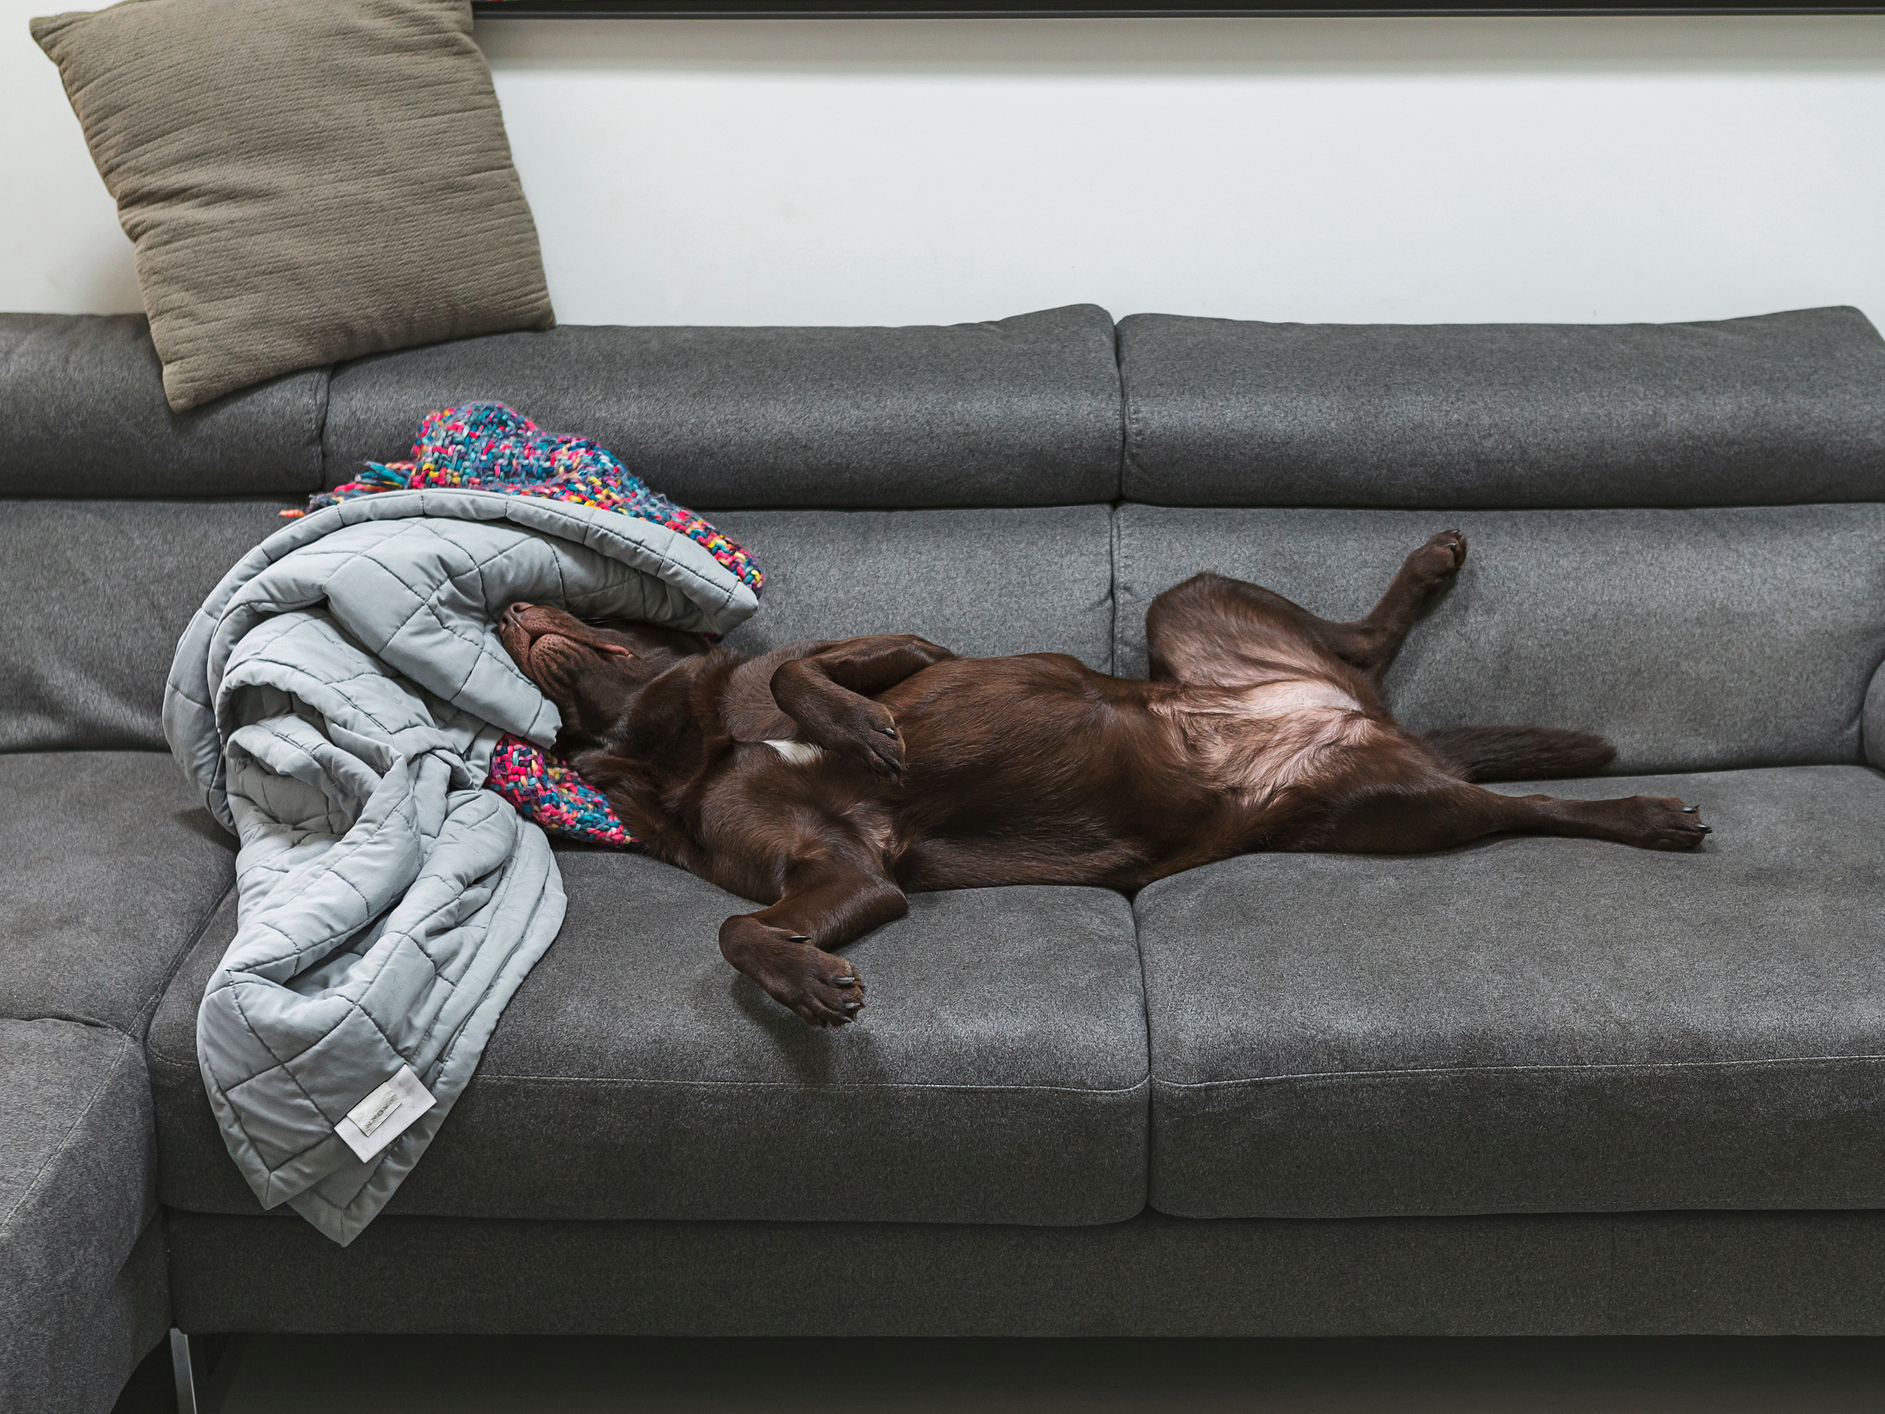 Labrador asleep on sofa